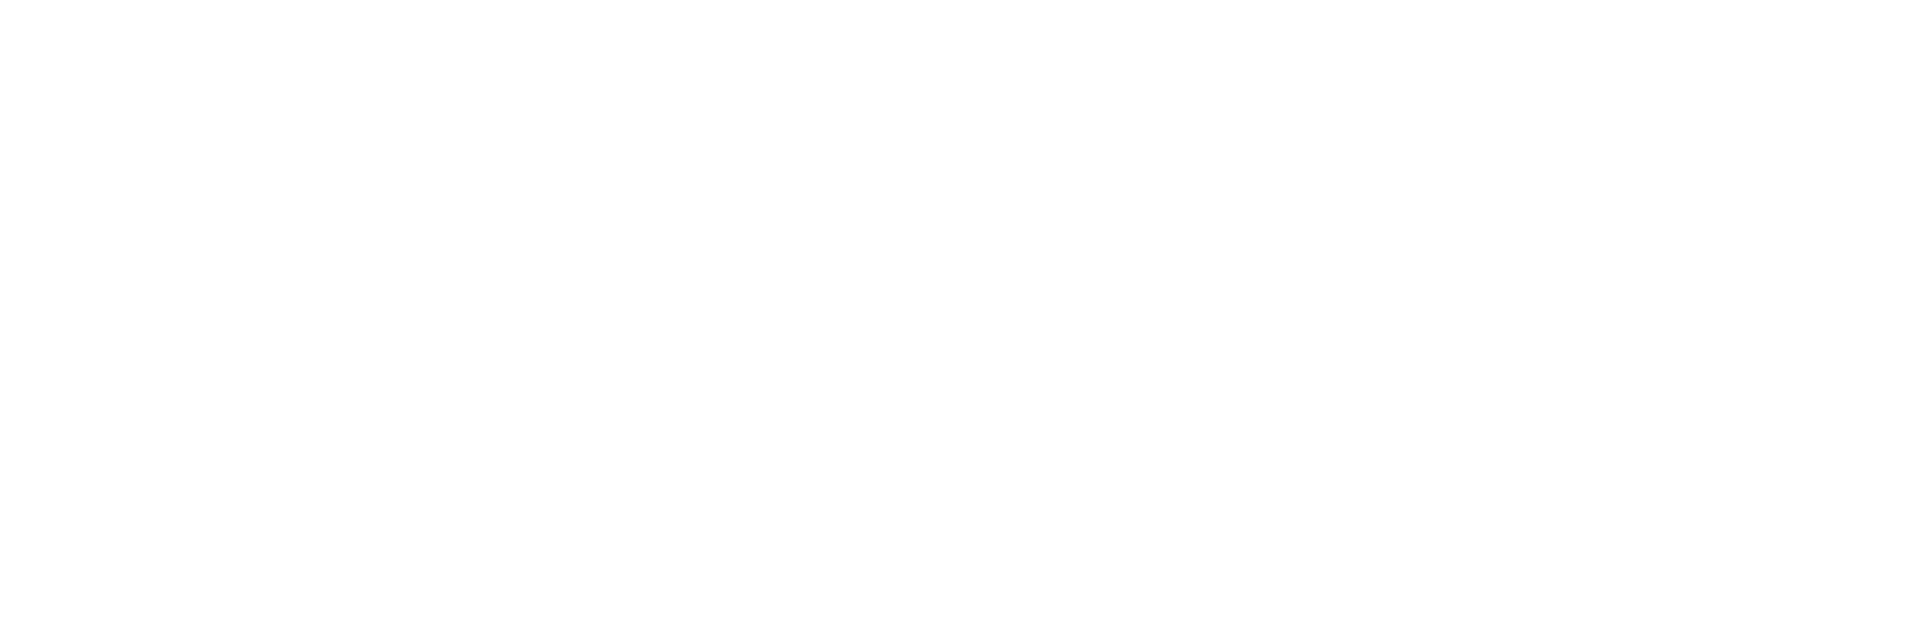 Opportunities Strategy logo